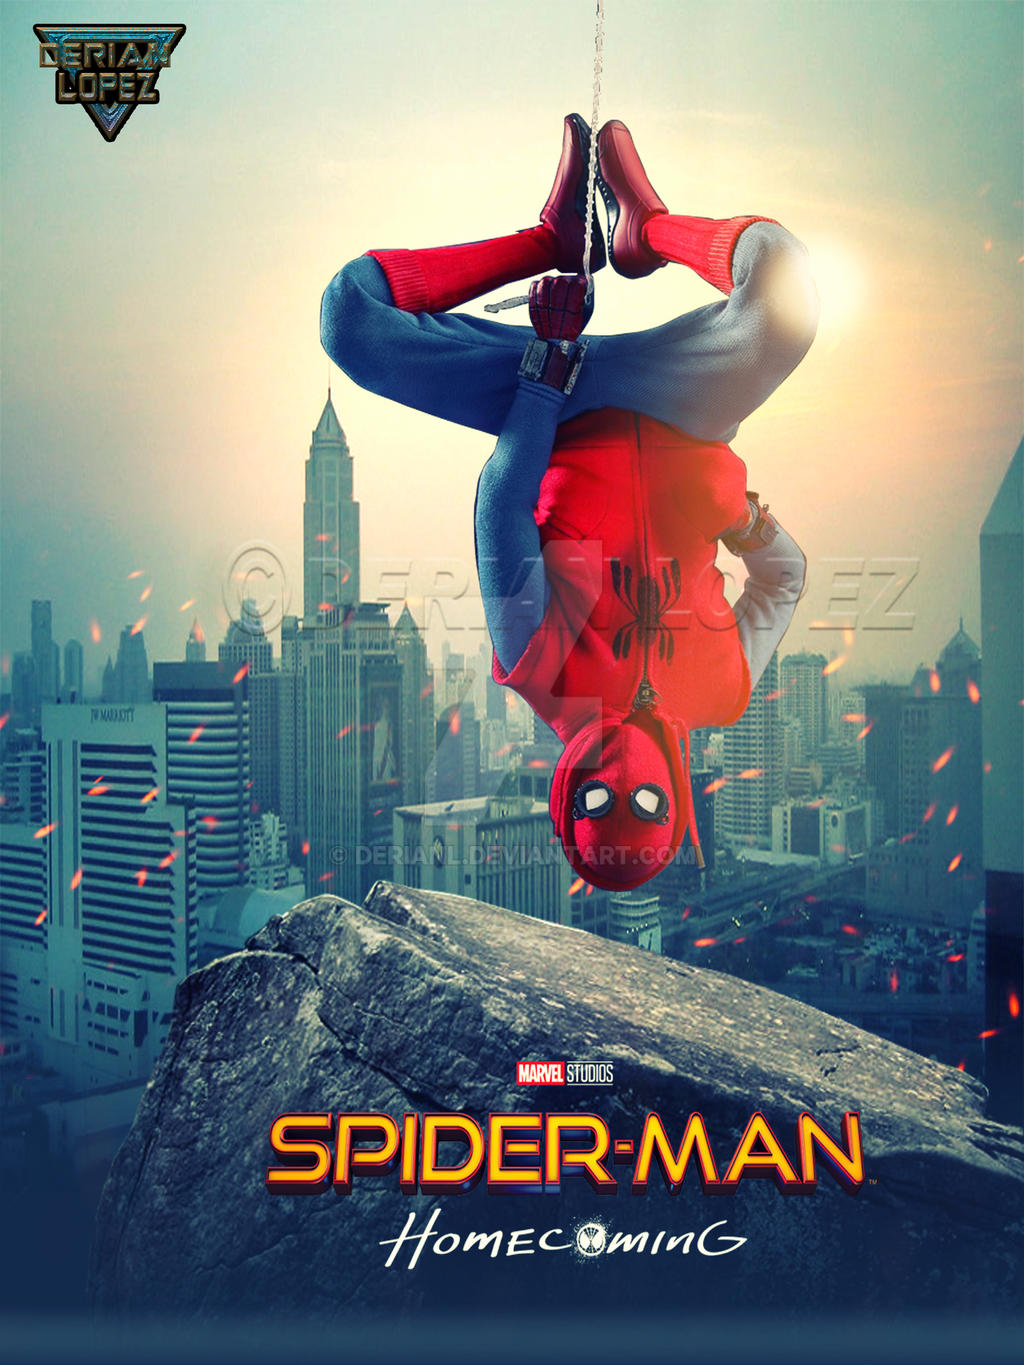 Spider-man Homecoming Poster Revised 2 by derianl on DeviantArt1024 x 1365